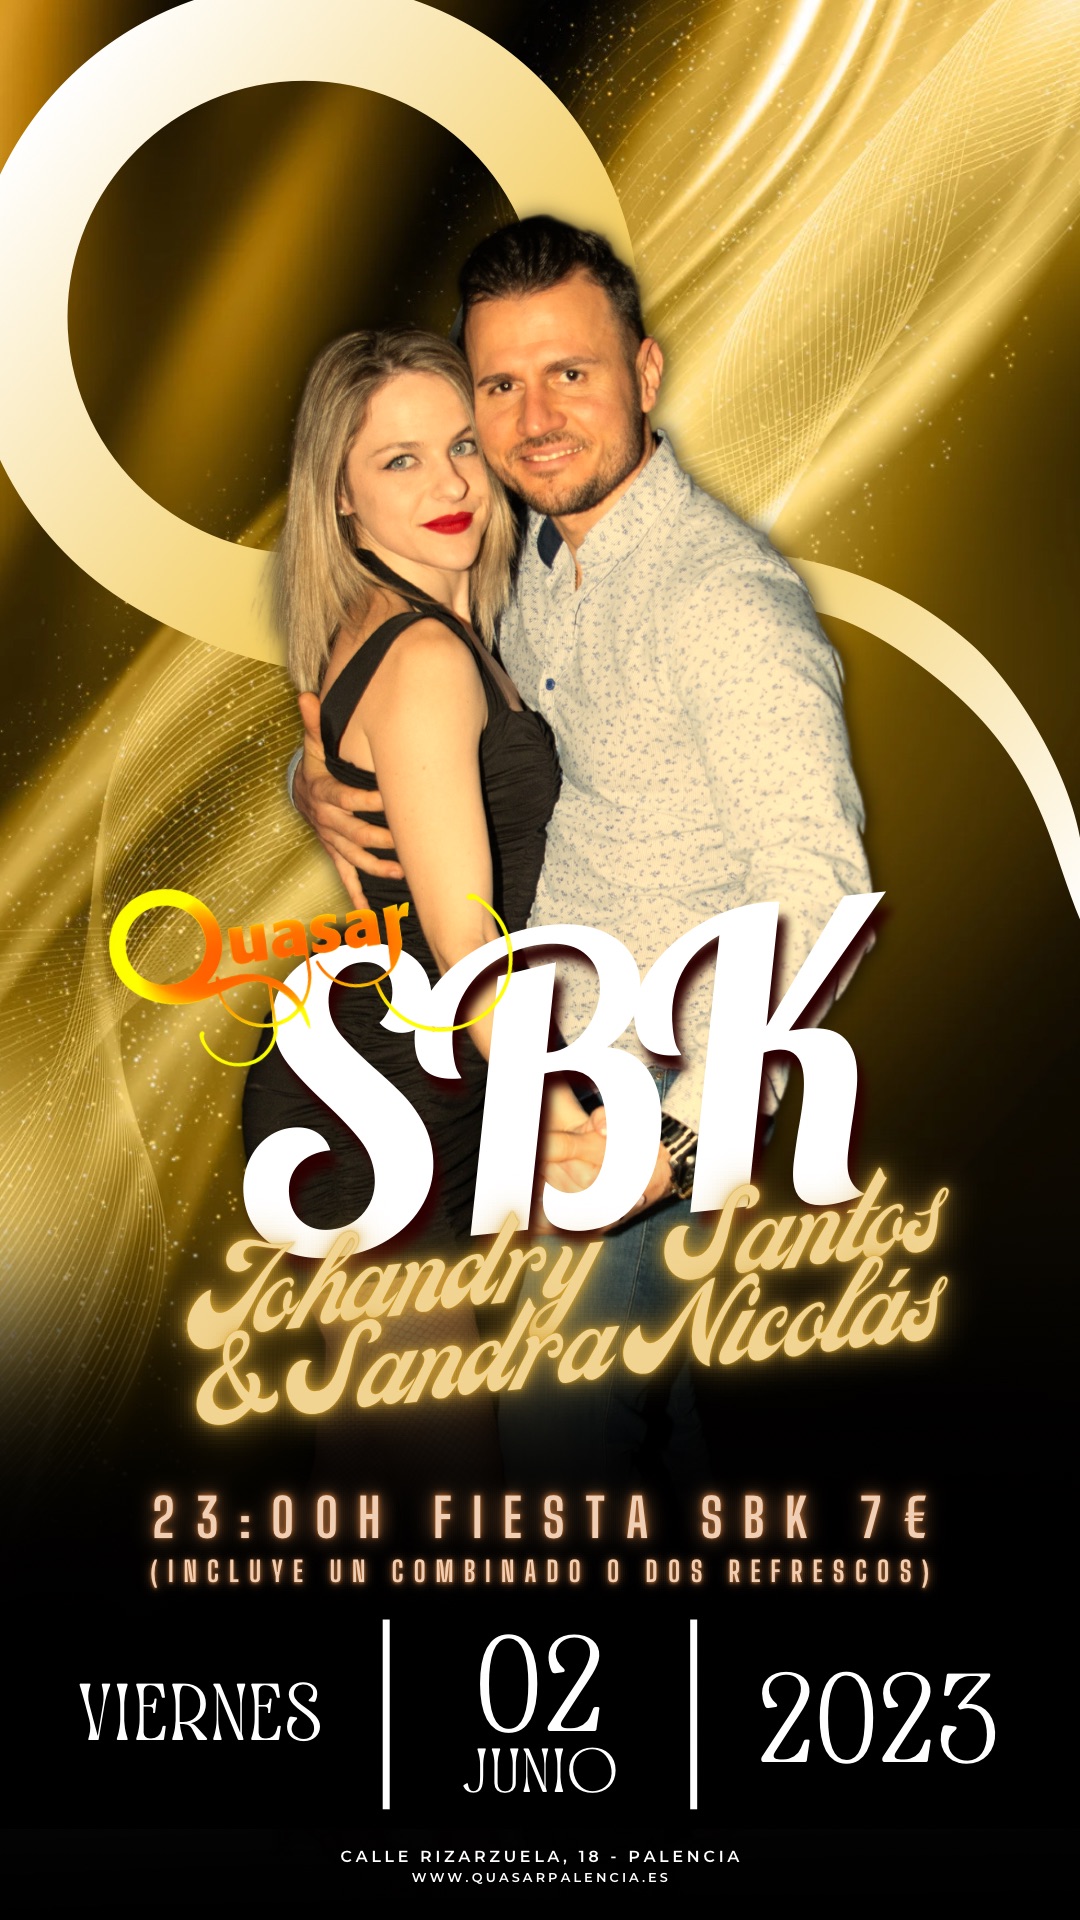 SBK Johandry Santos & Sandra Nicolás